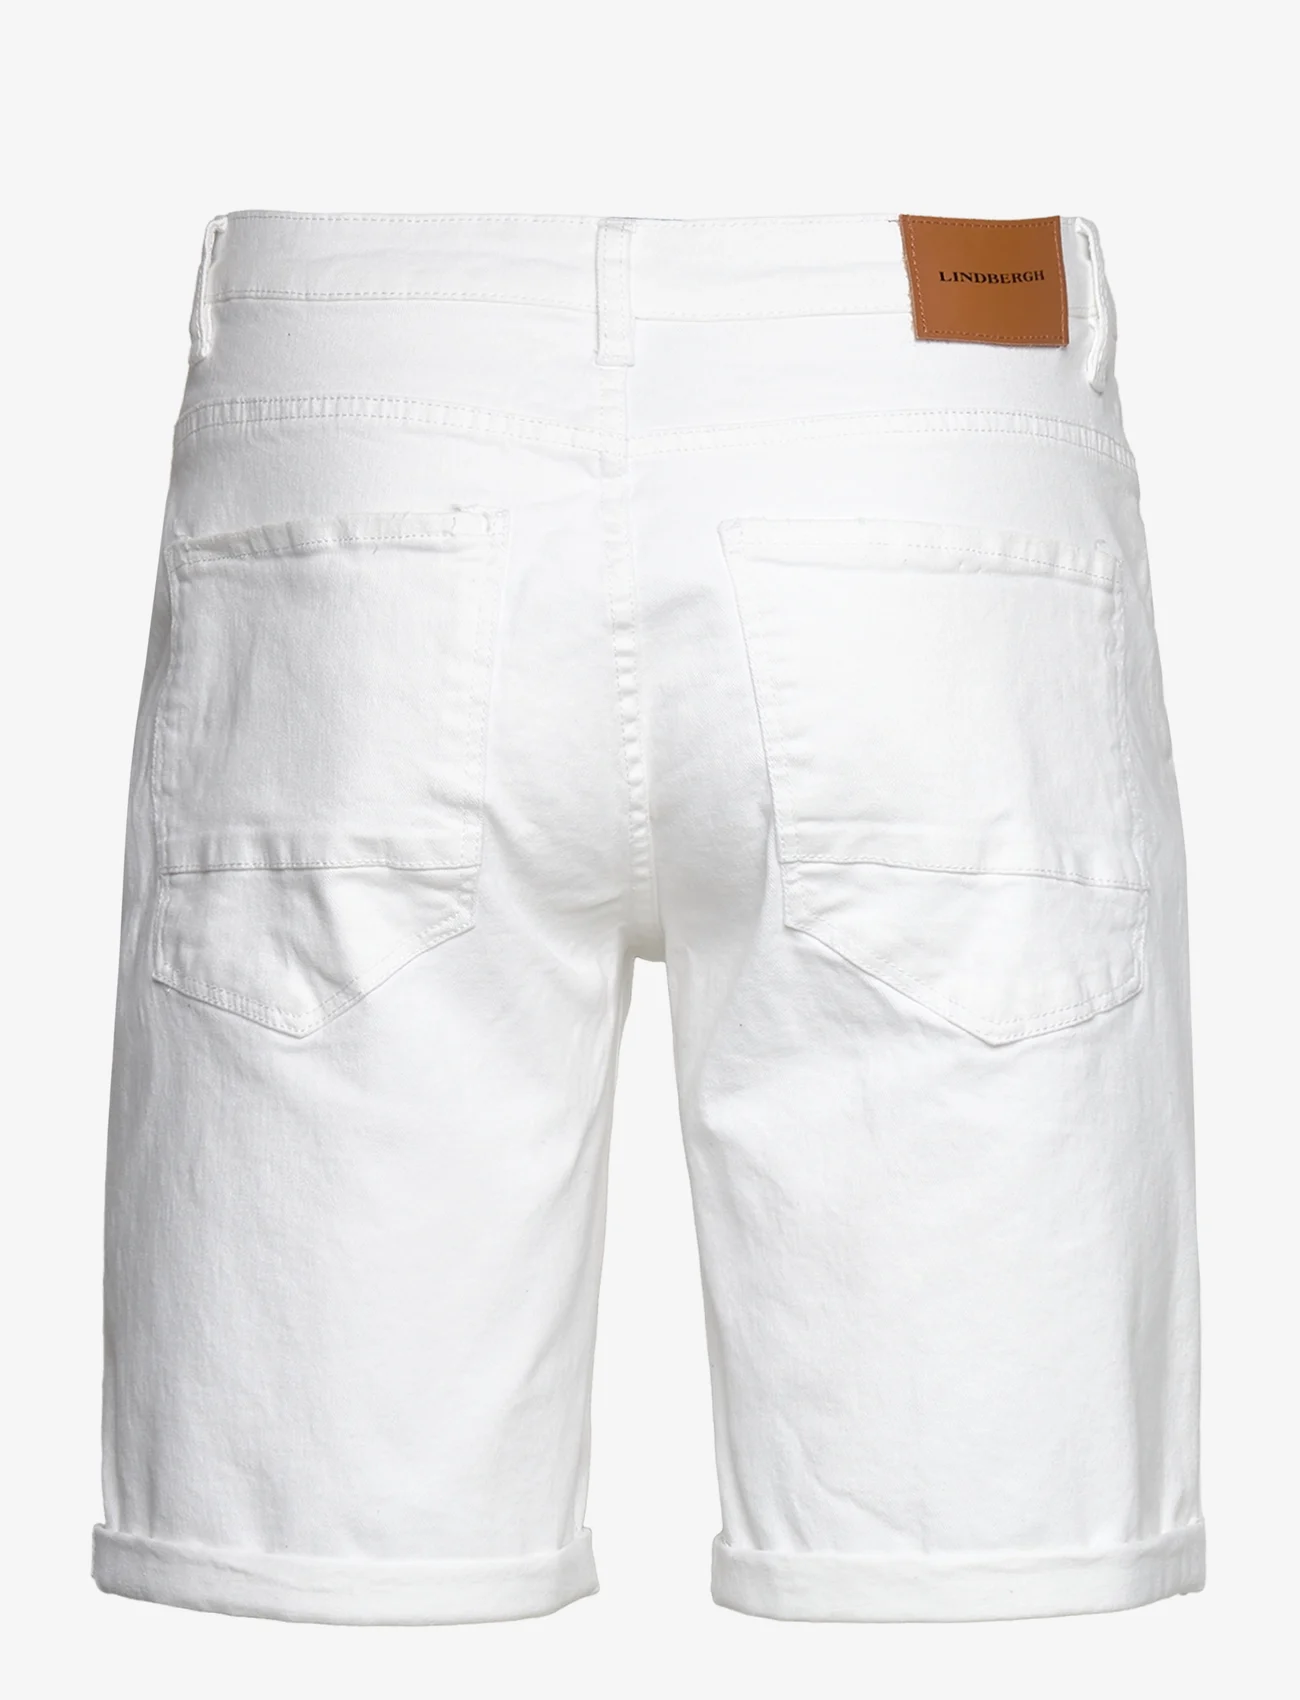 Lindbergh - Regular fit denim shorts - jeans shorts - white - 1